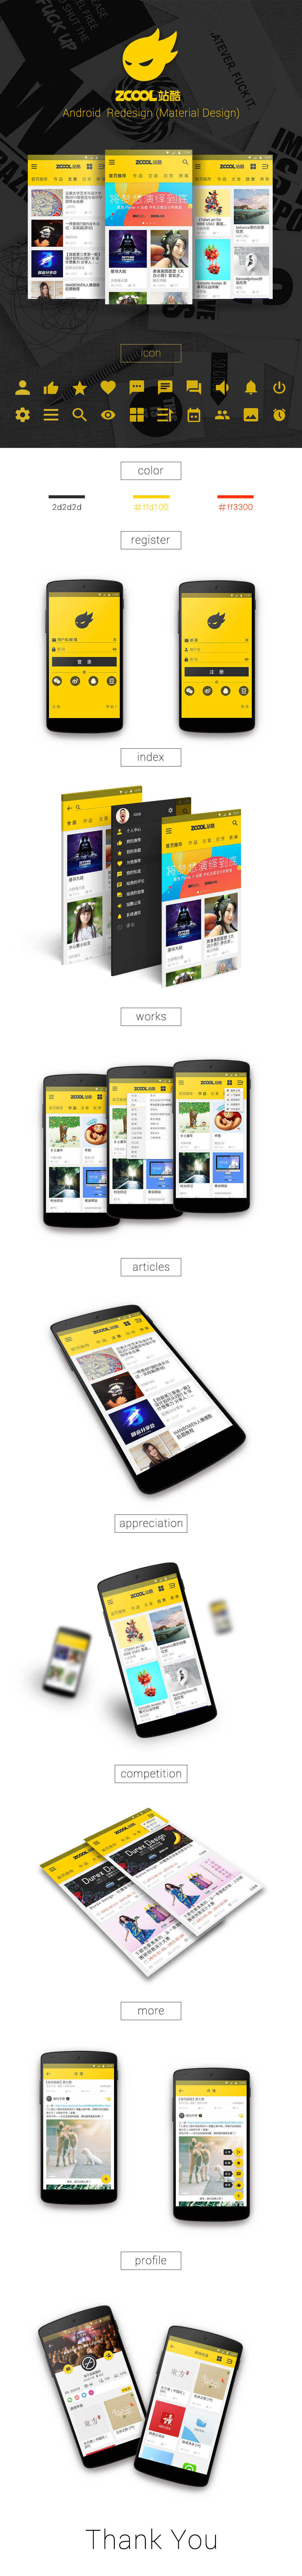 redesign material design app Mobile app